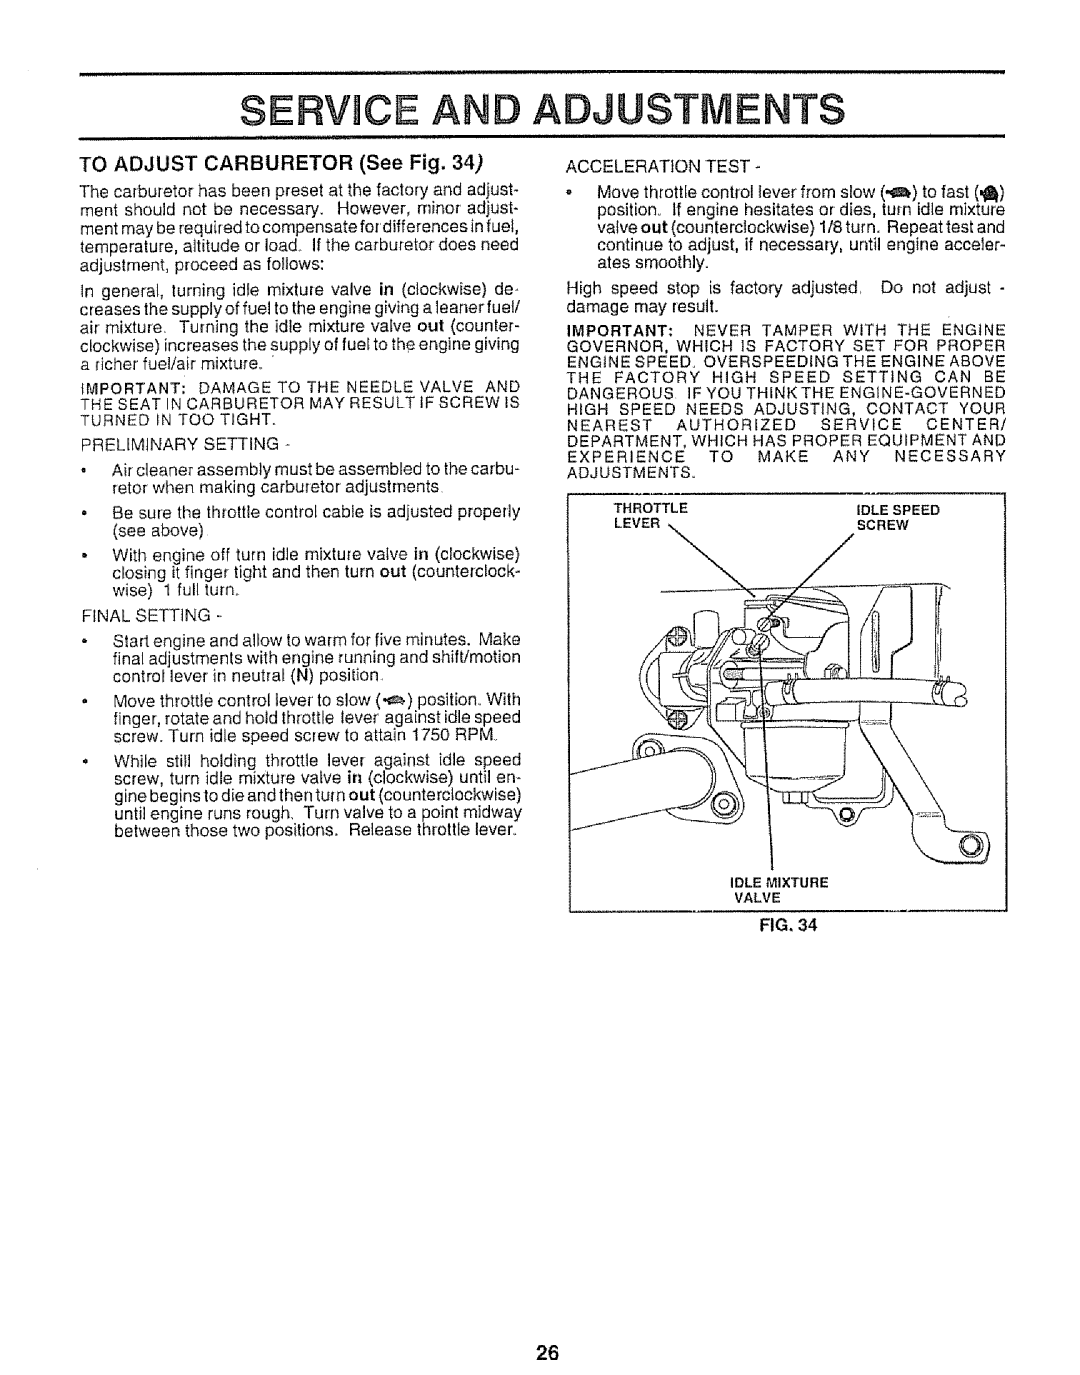 Sears 917.25953 owner manual Service A Adjustments, TO ADJUST CARBURETOR See Fig 